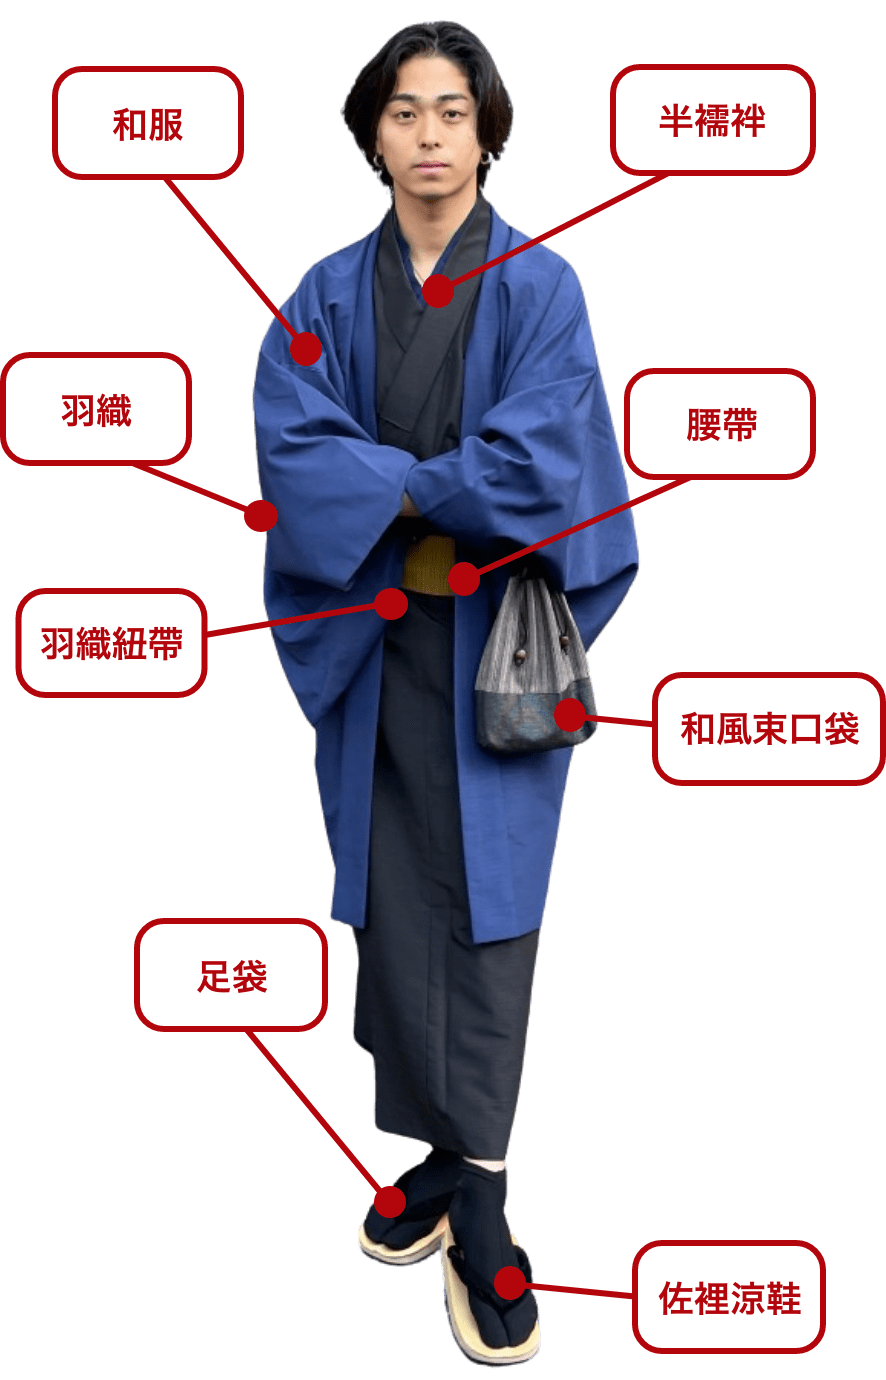 Items of Men's Kimono